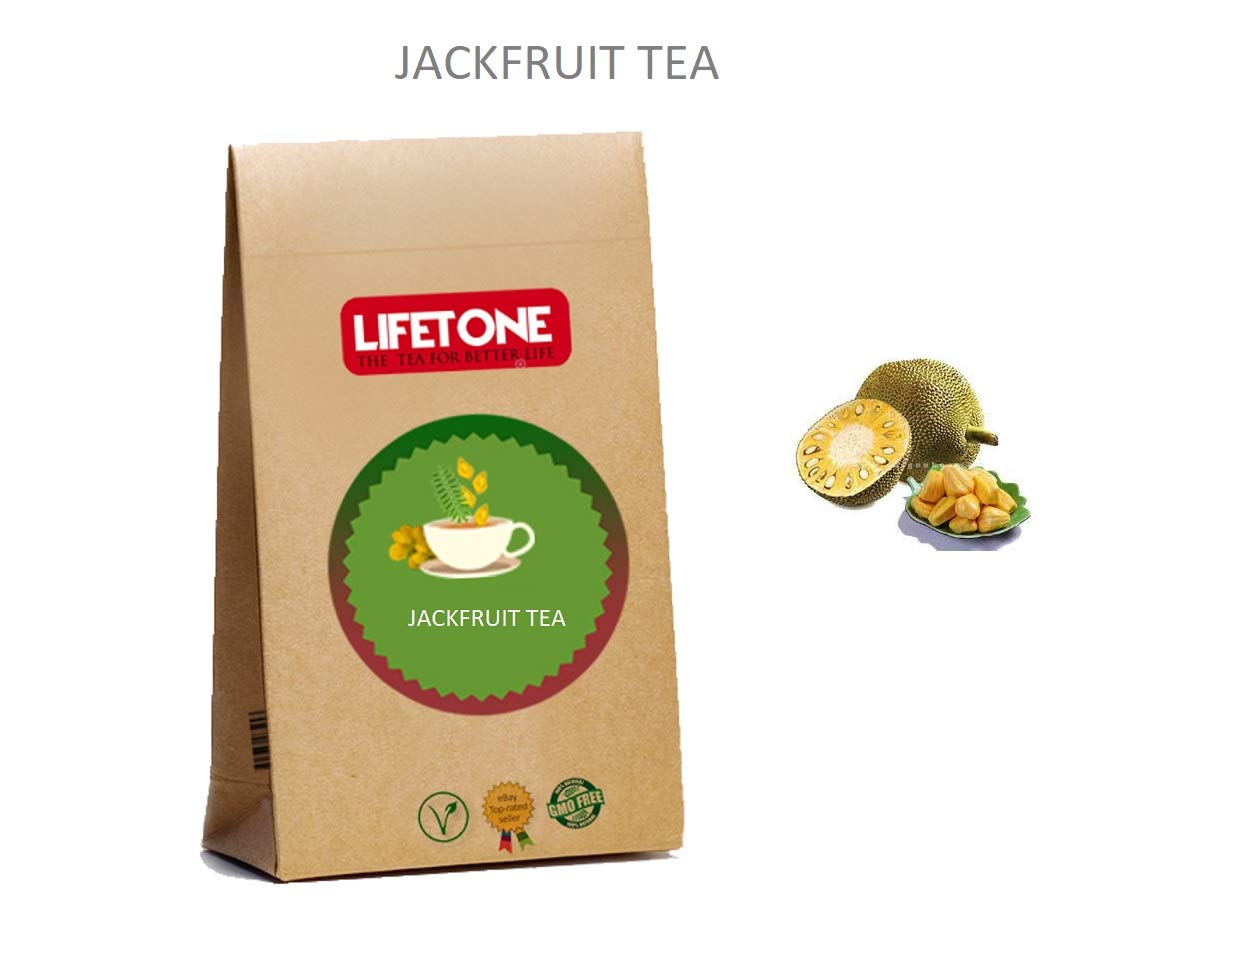 Jackfruit Tea, Sweet Delicious Detox Tea,20 Individually Wrapped teabags,40g